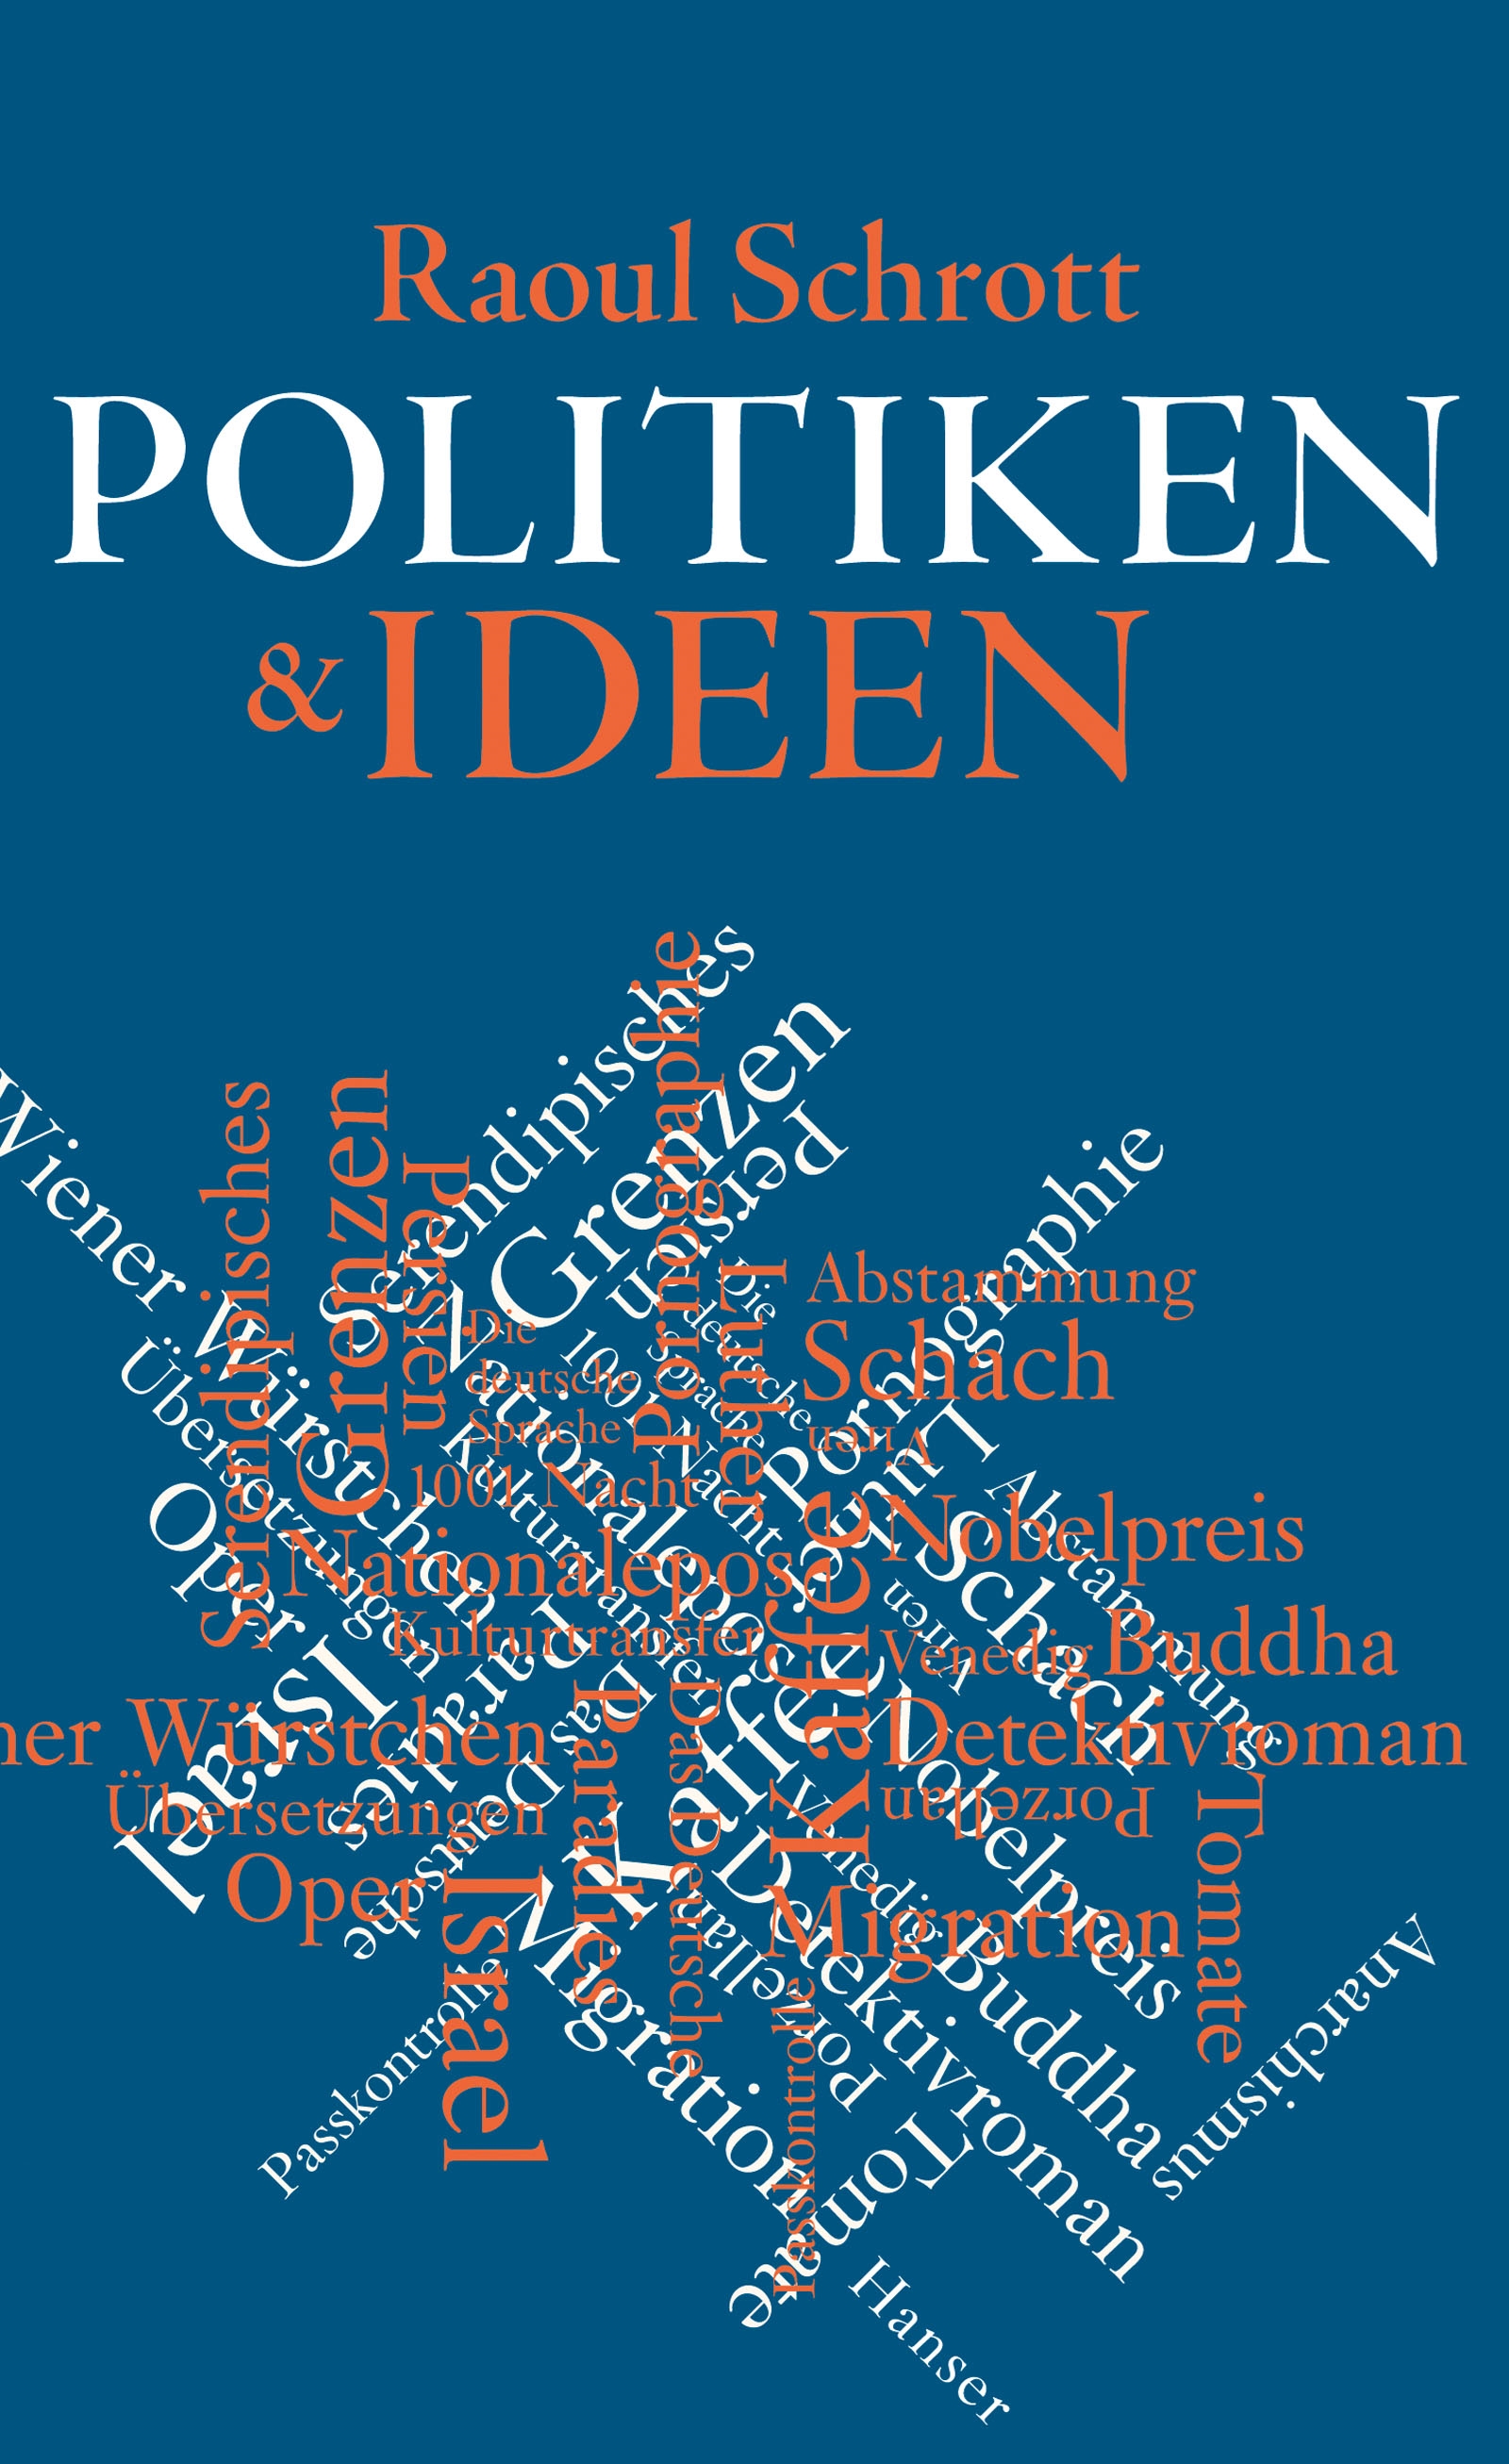 Politics & Ideas